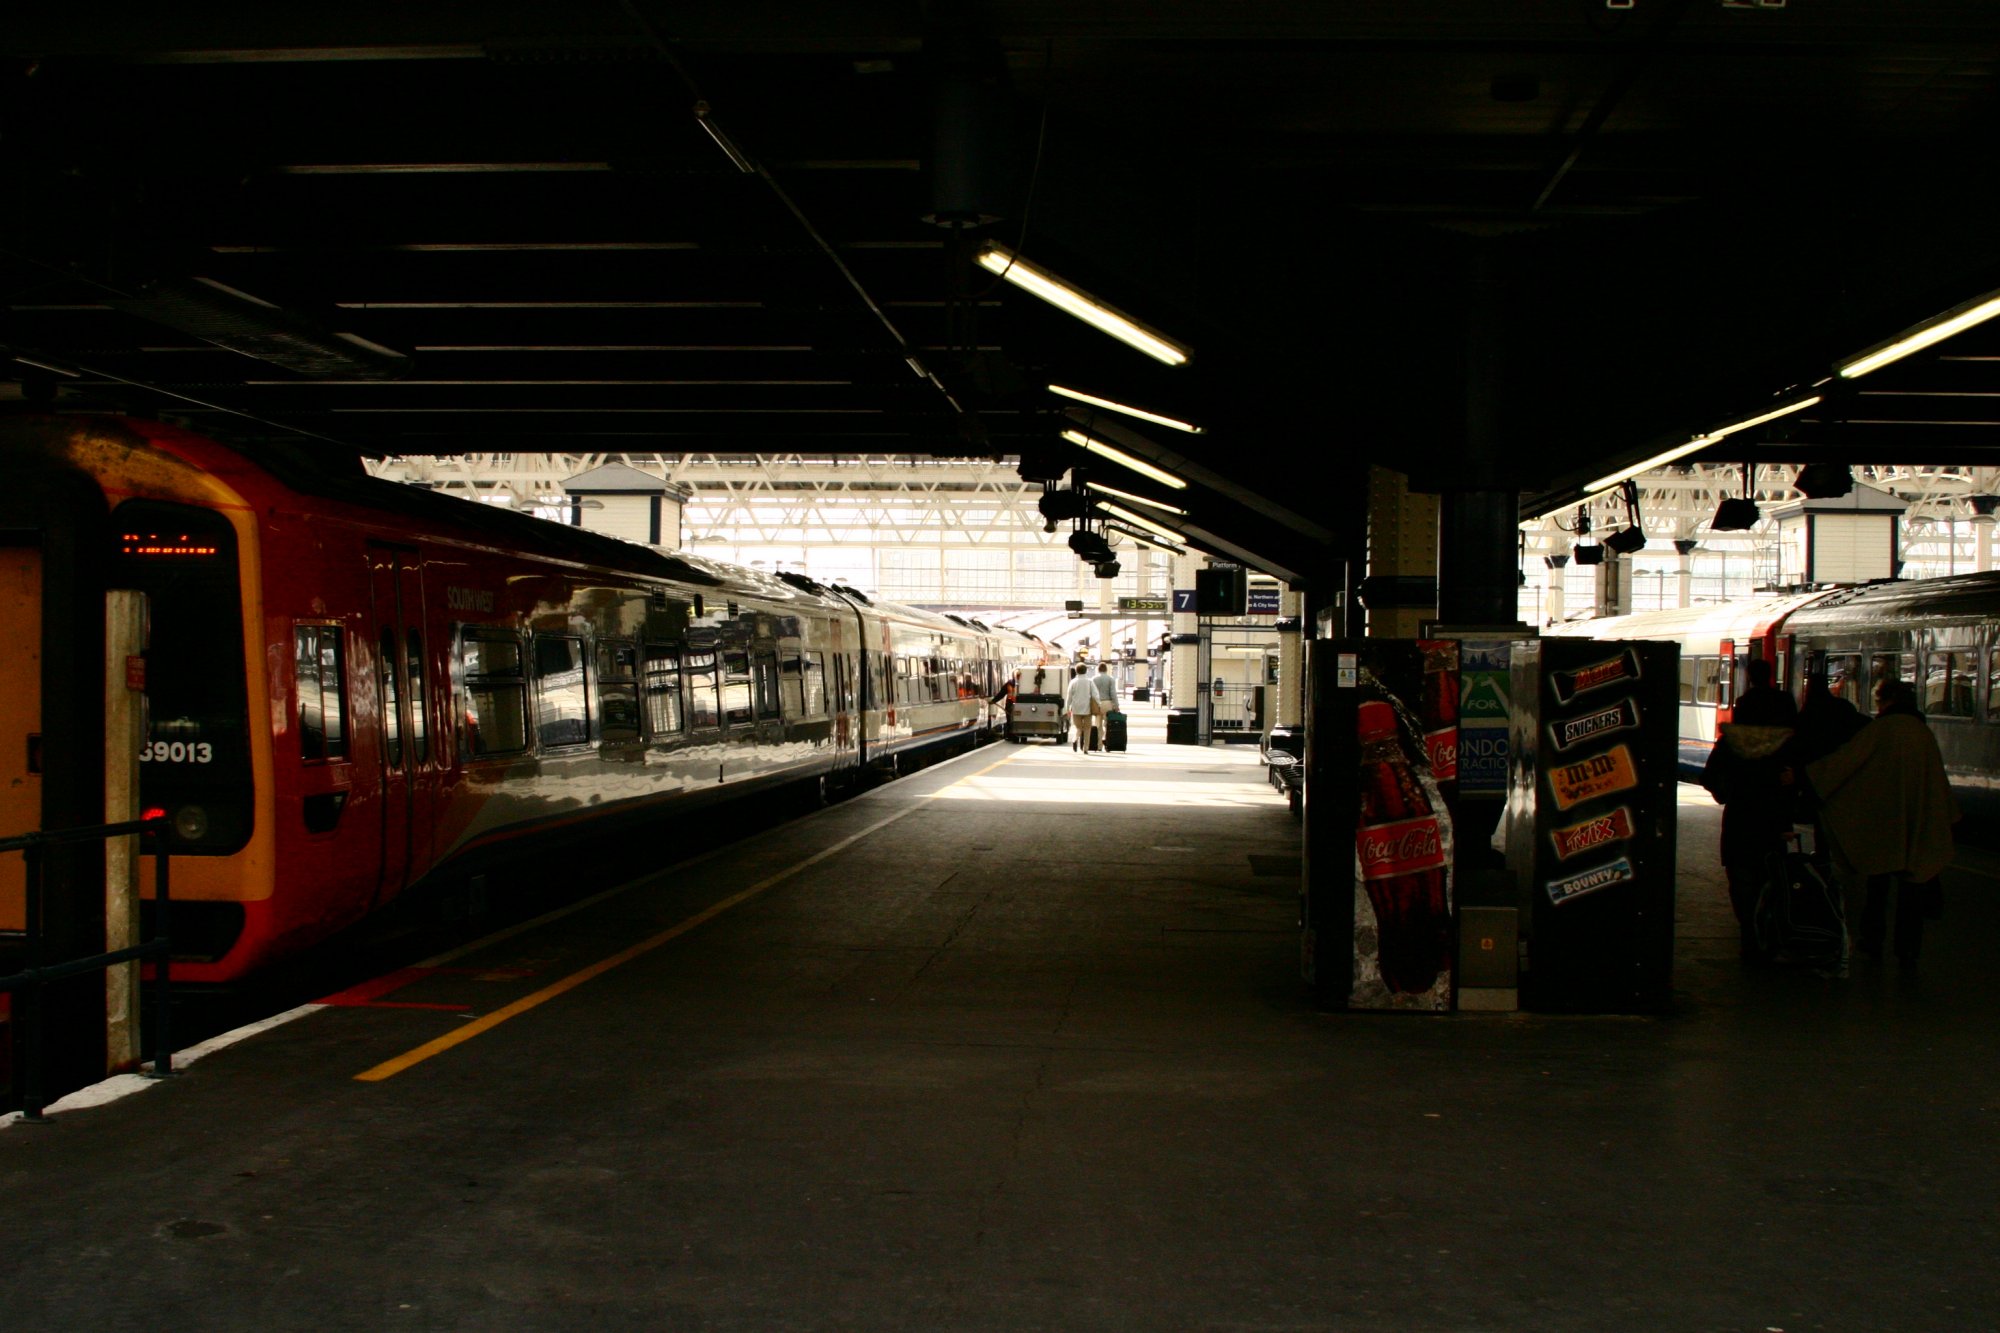 Waterloo Station - London - 28 Mar 2006